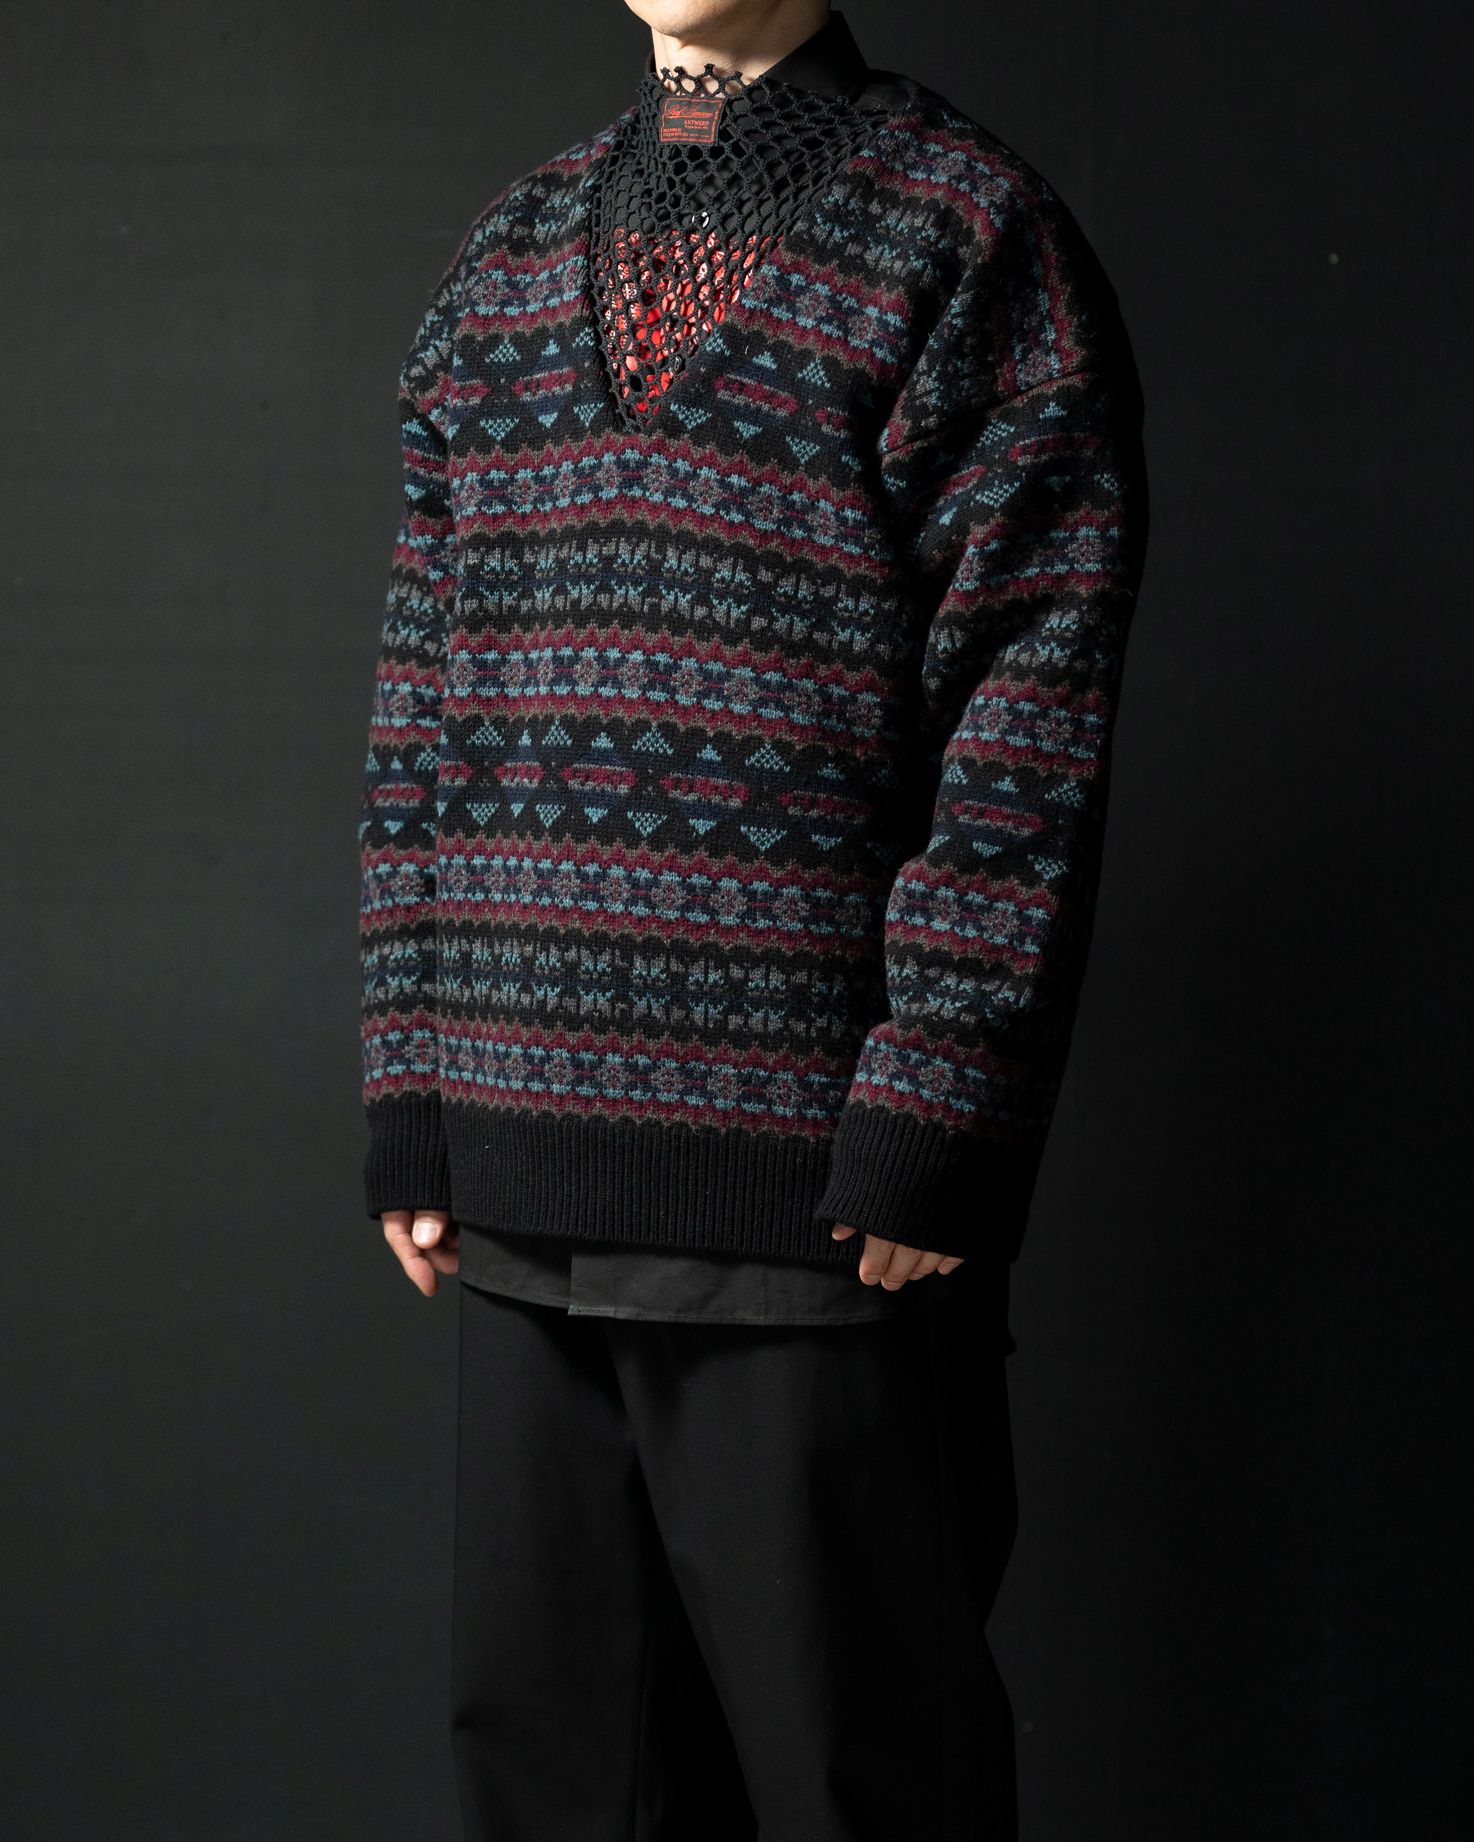 RAF SIMONS - Fair Isle jacquard V-neck sweater with net insert